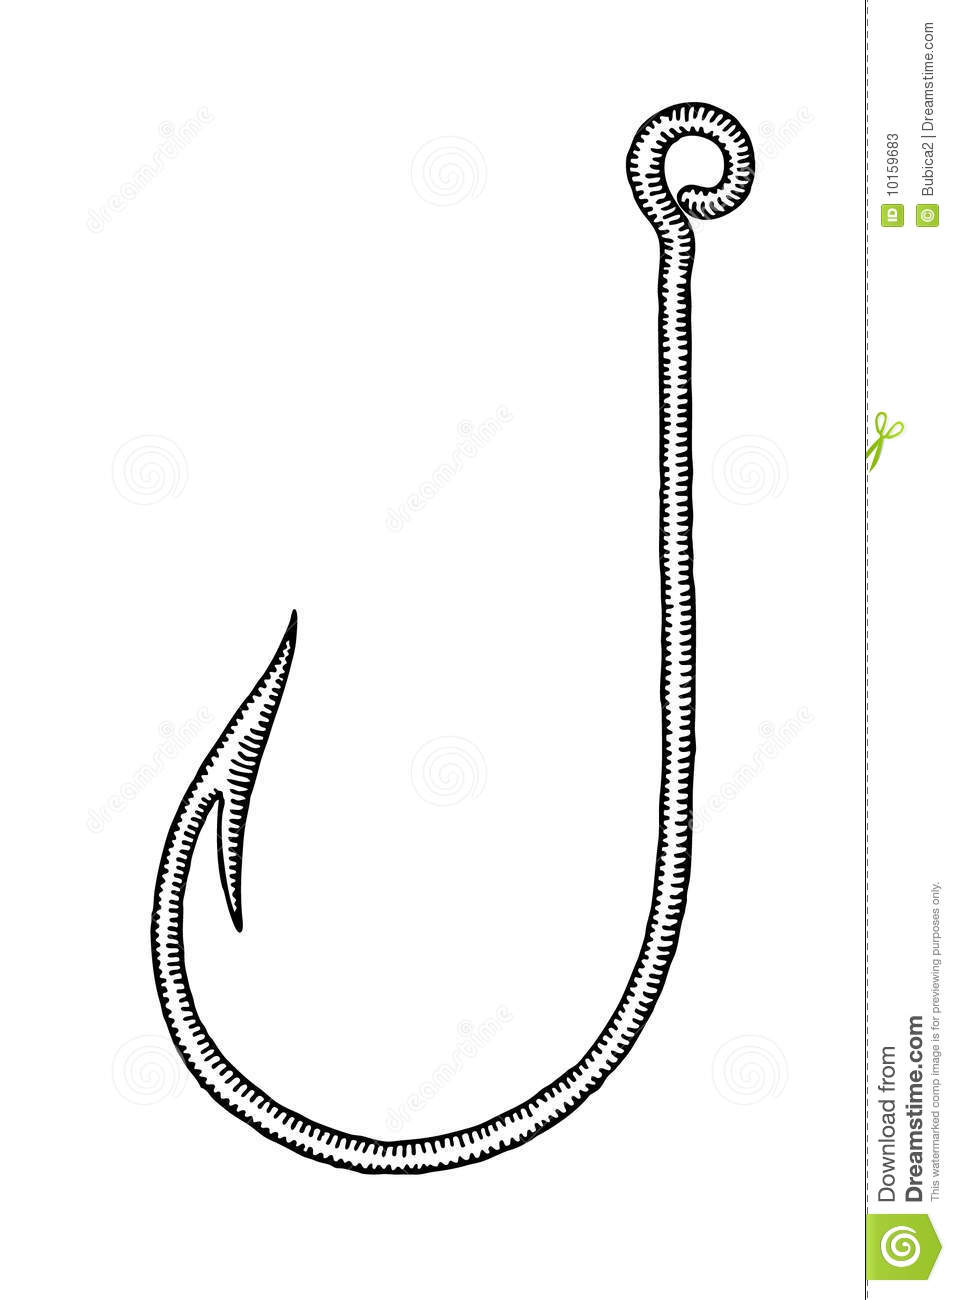 Fishing Hook Black And White Engraved Stock Photos   Image  10159683